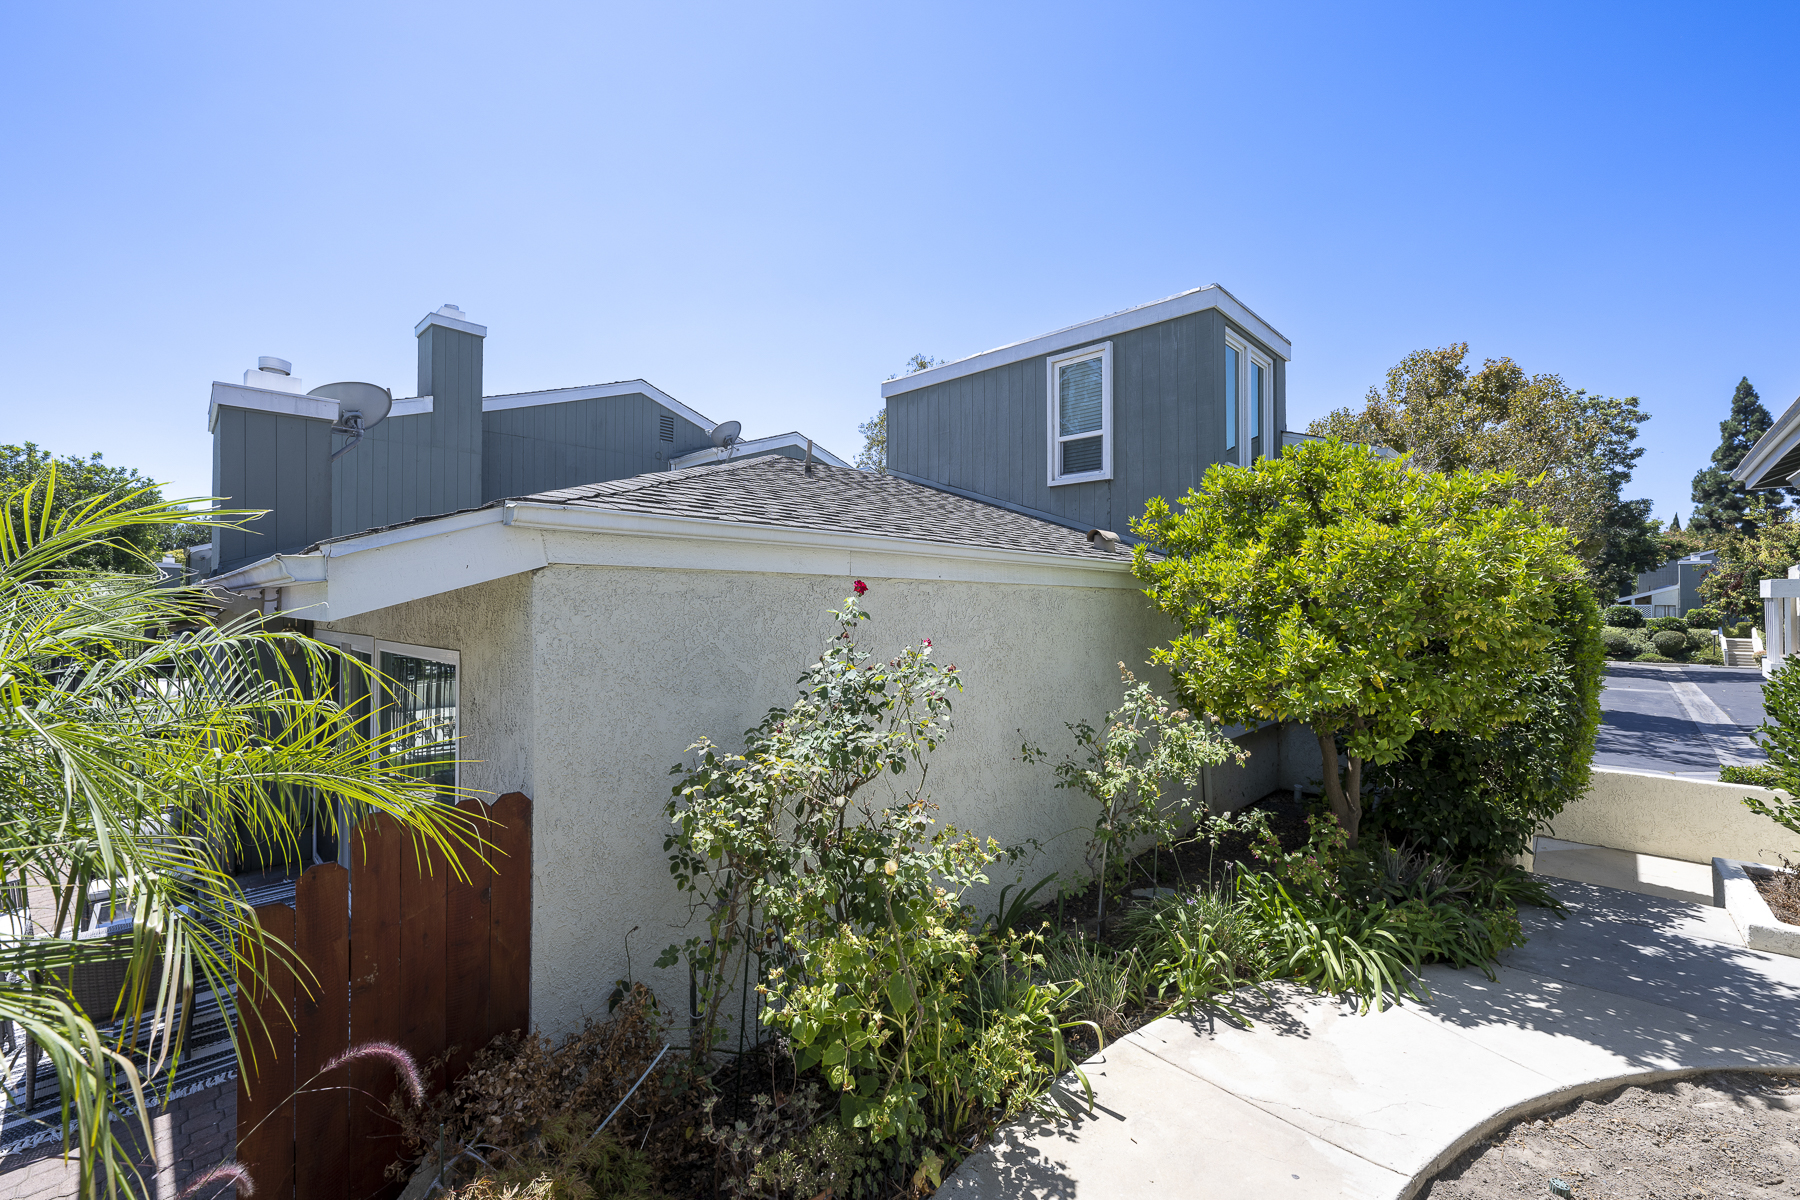 3424 Pinebrook Costa Mesa CA 92626: Backyard of the house with sidewalk.